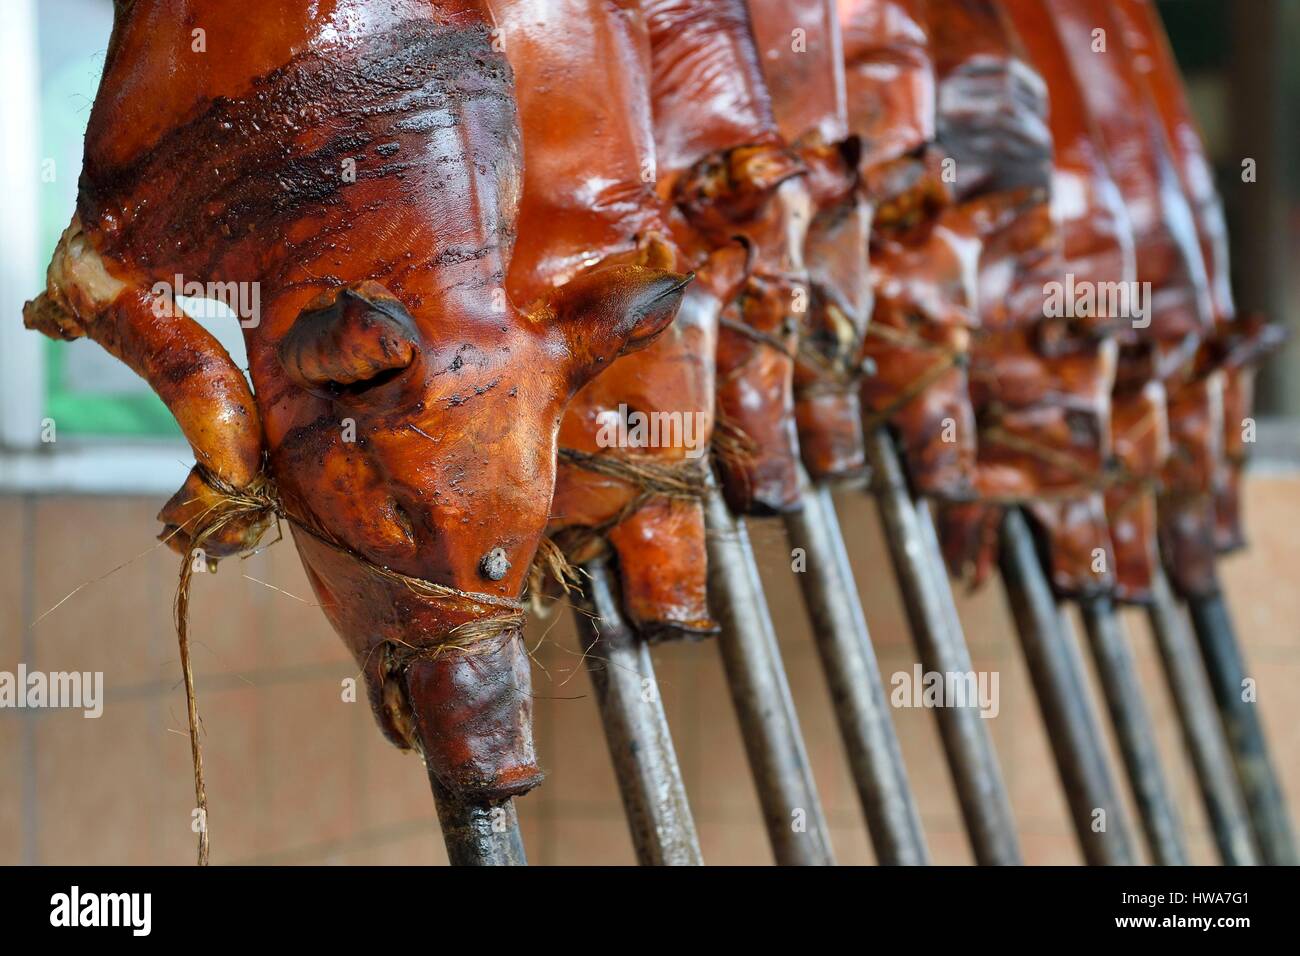 Philippines, Luzon island, Manila, La Loma district, spit-roasted suckling pig (lechon) Stock Photo